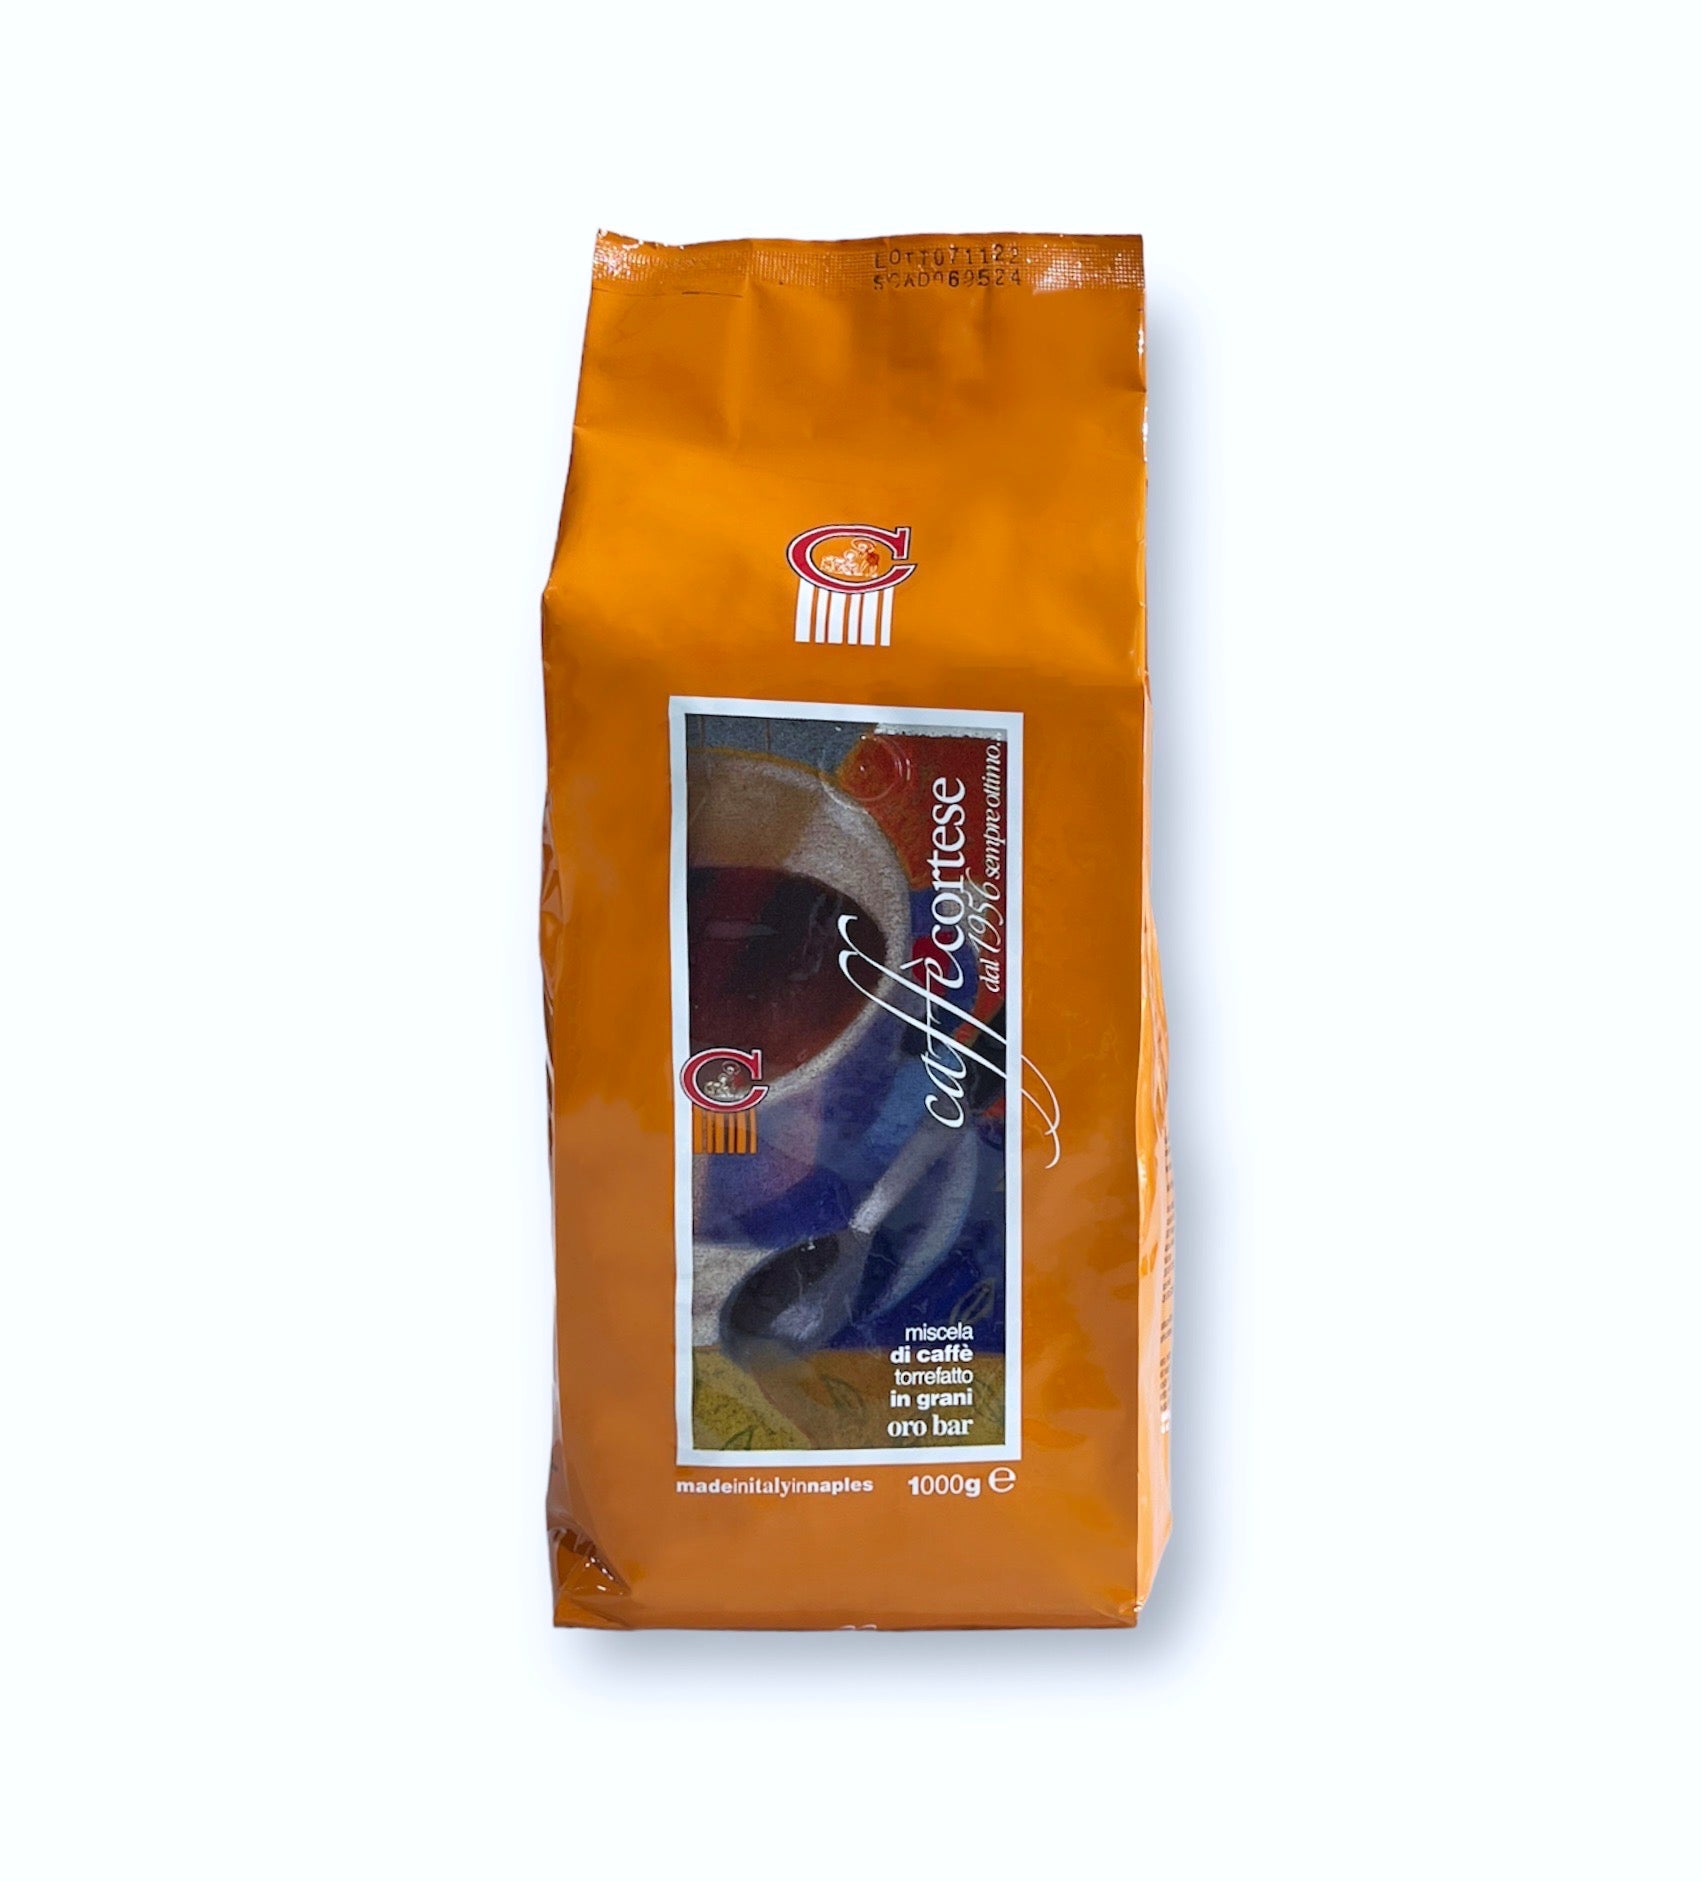 Caffe Cortese - Coffee 1Kg (Orange bag)